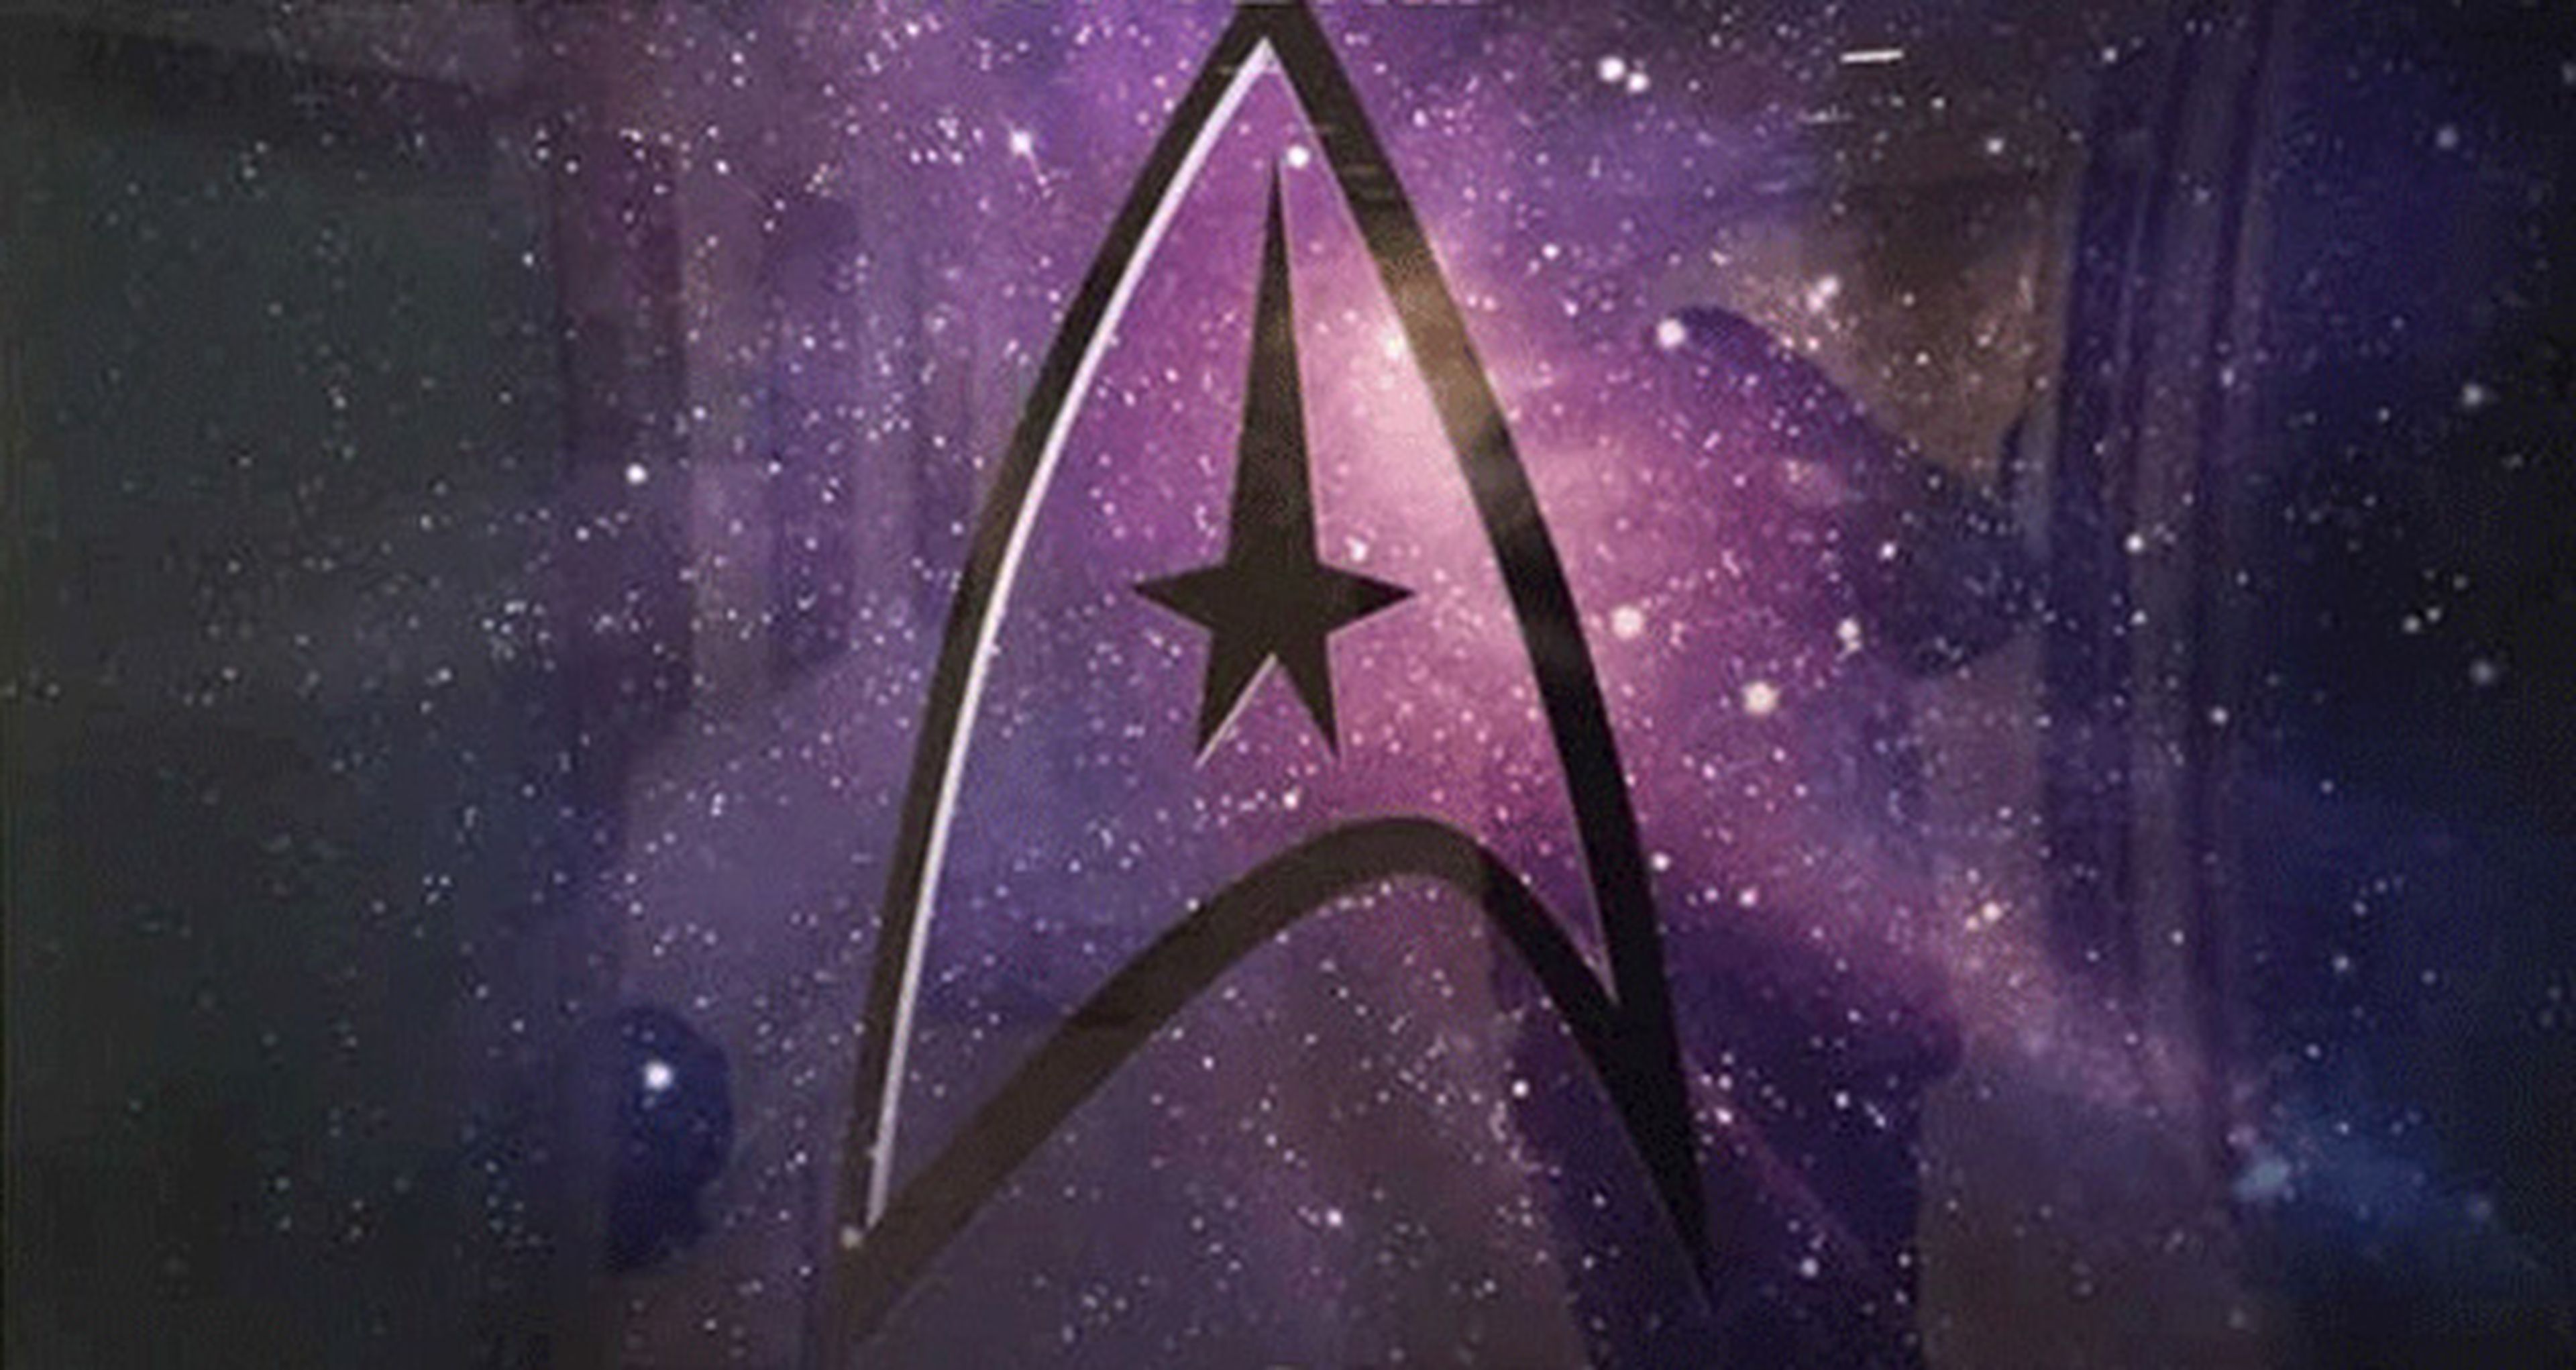 Star Trek - Cartel promocional de la nueva serie de la CBS